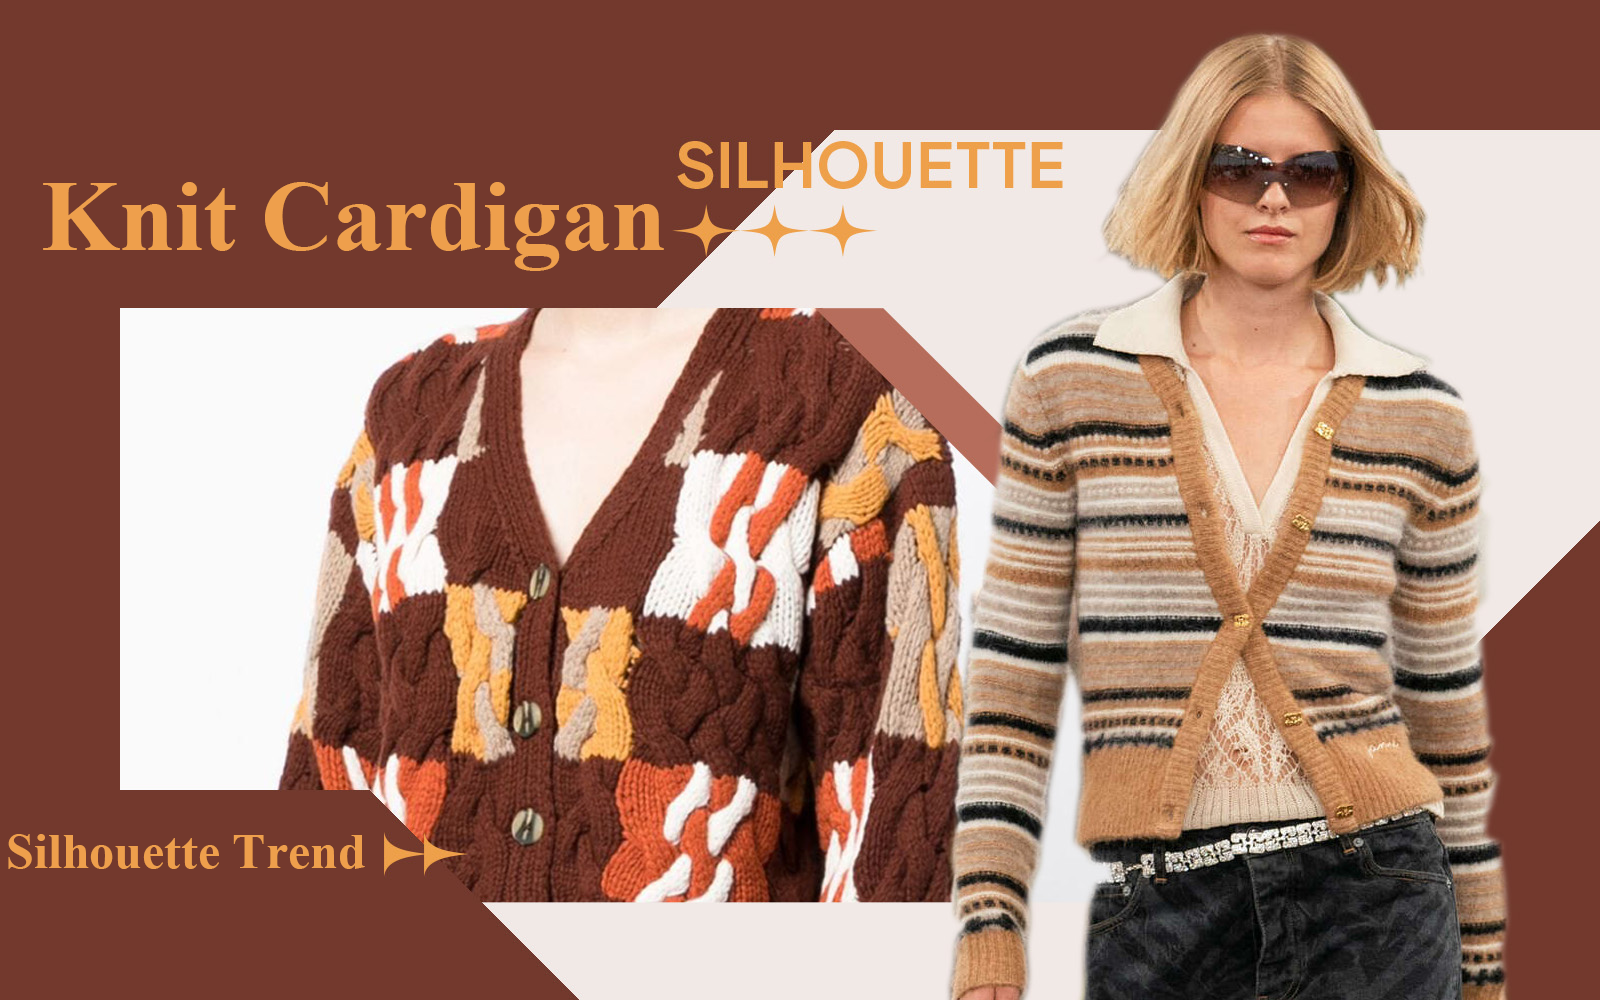 Cardigan -- A/W 24/25 The Silhouette Trend for Women's Knitwear